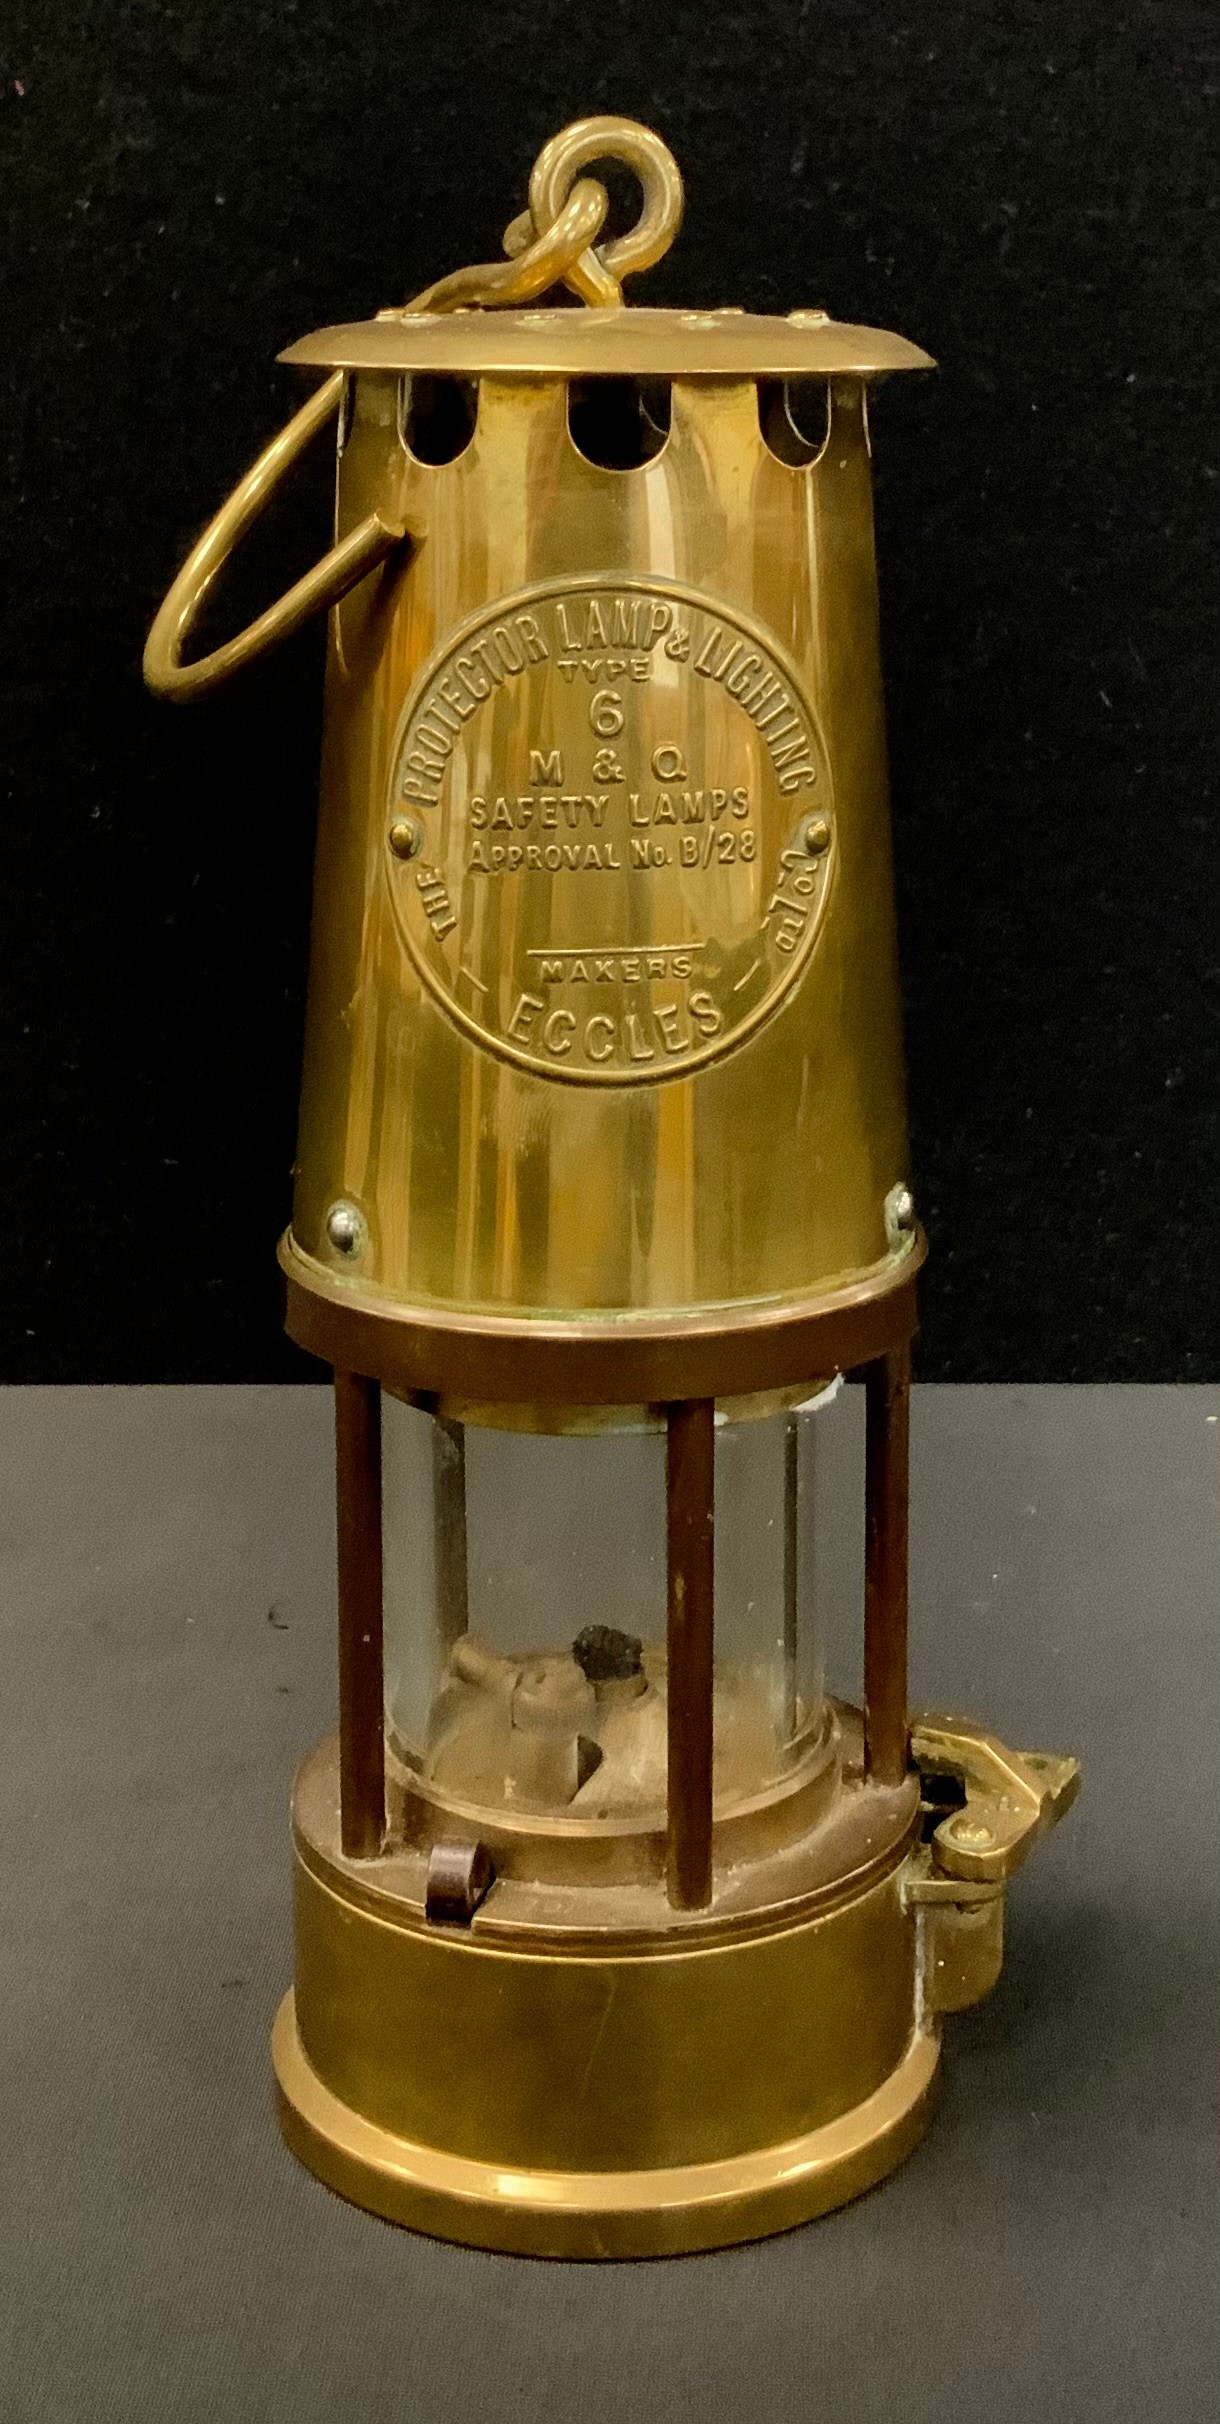 A brass Eccles miner’s lamp,26cm high